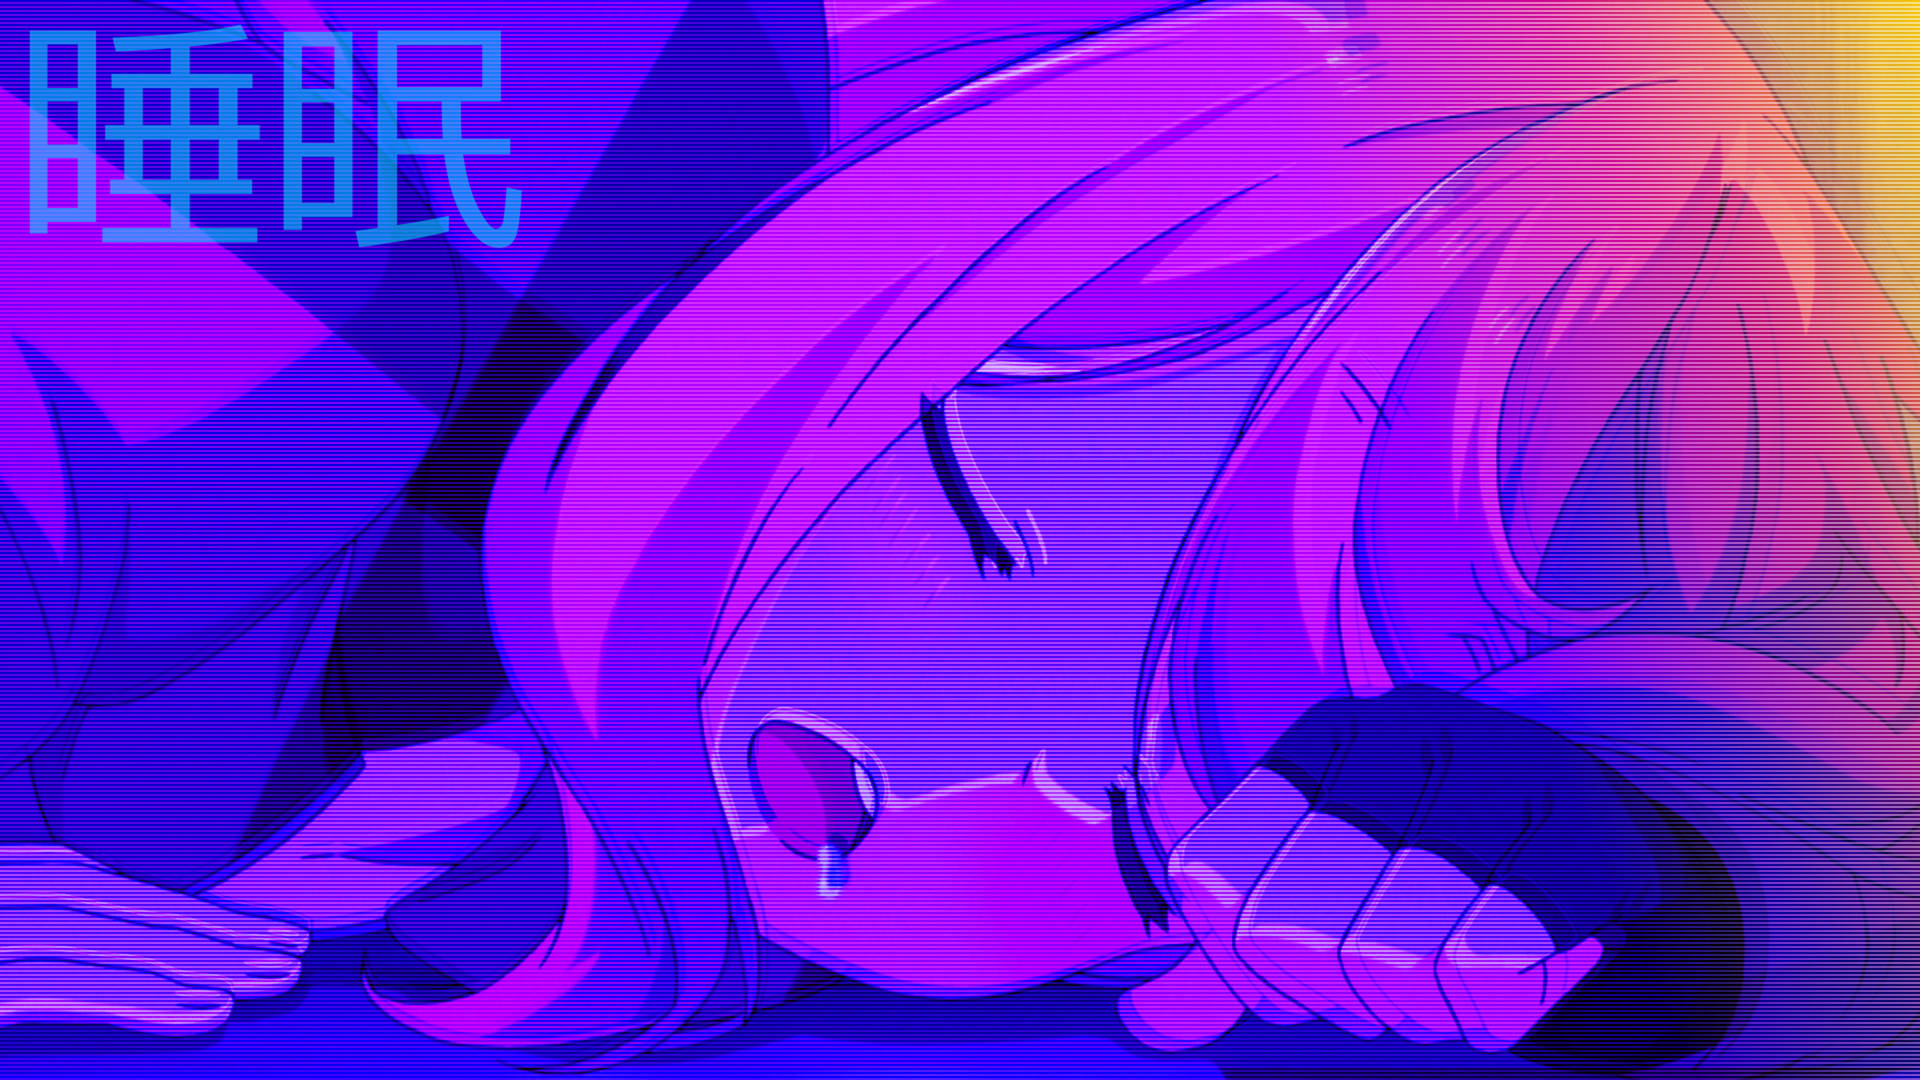 Sad Anime Iphone, on Jakpost.travel, anime girl sad dark HD phone wallpaper